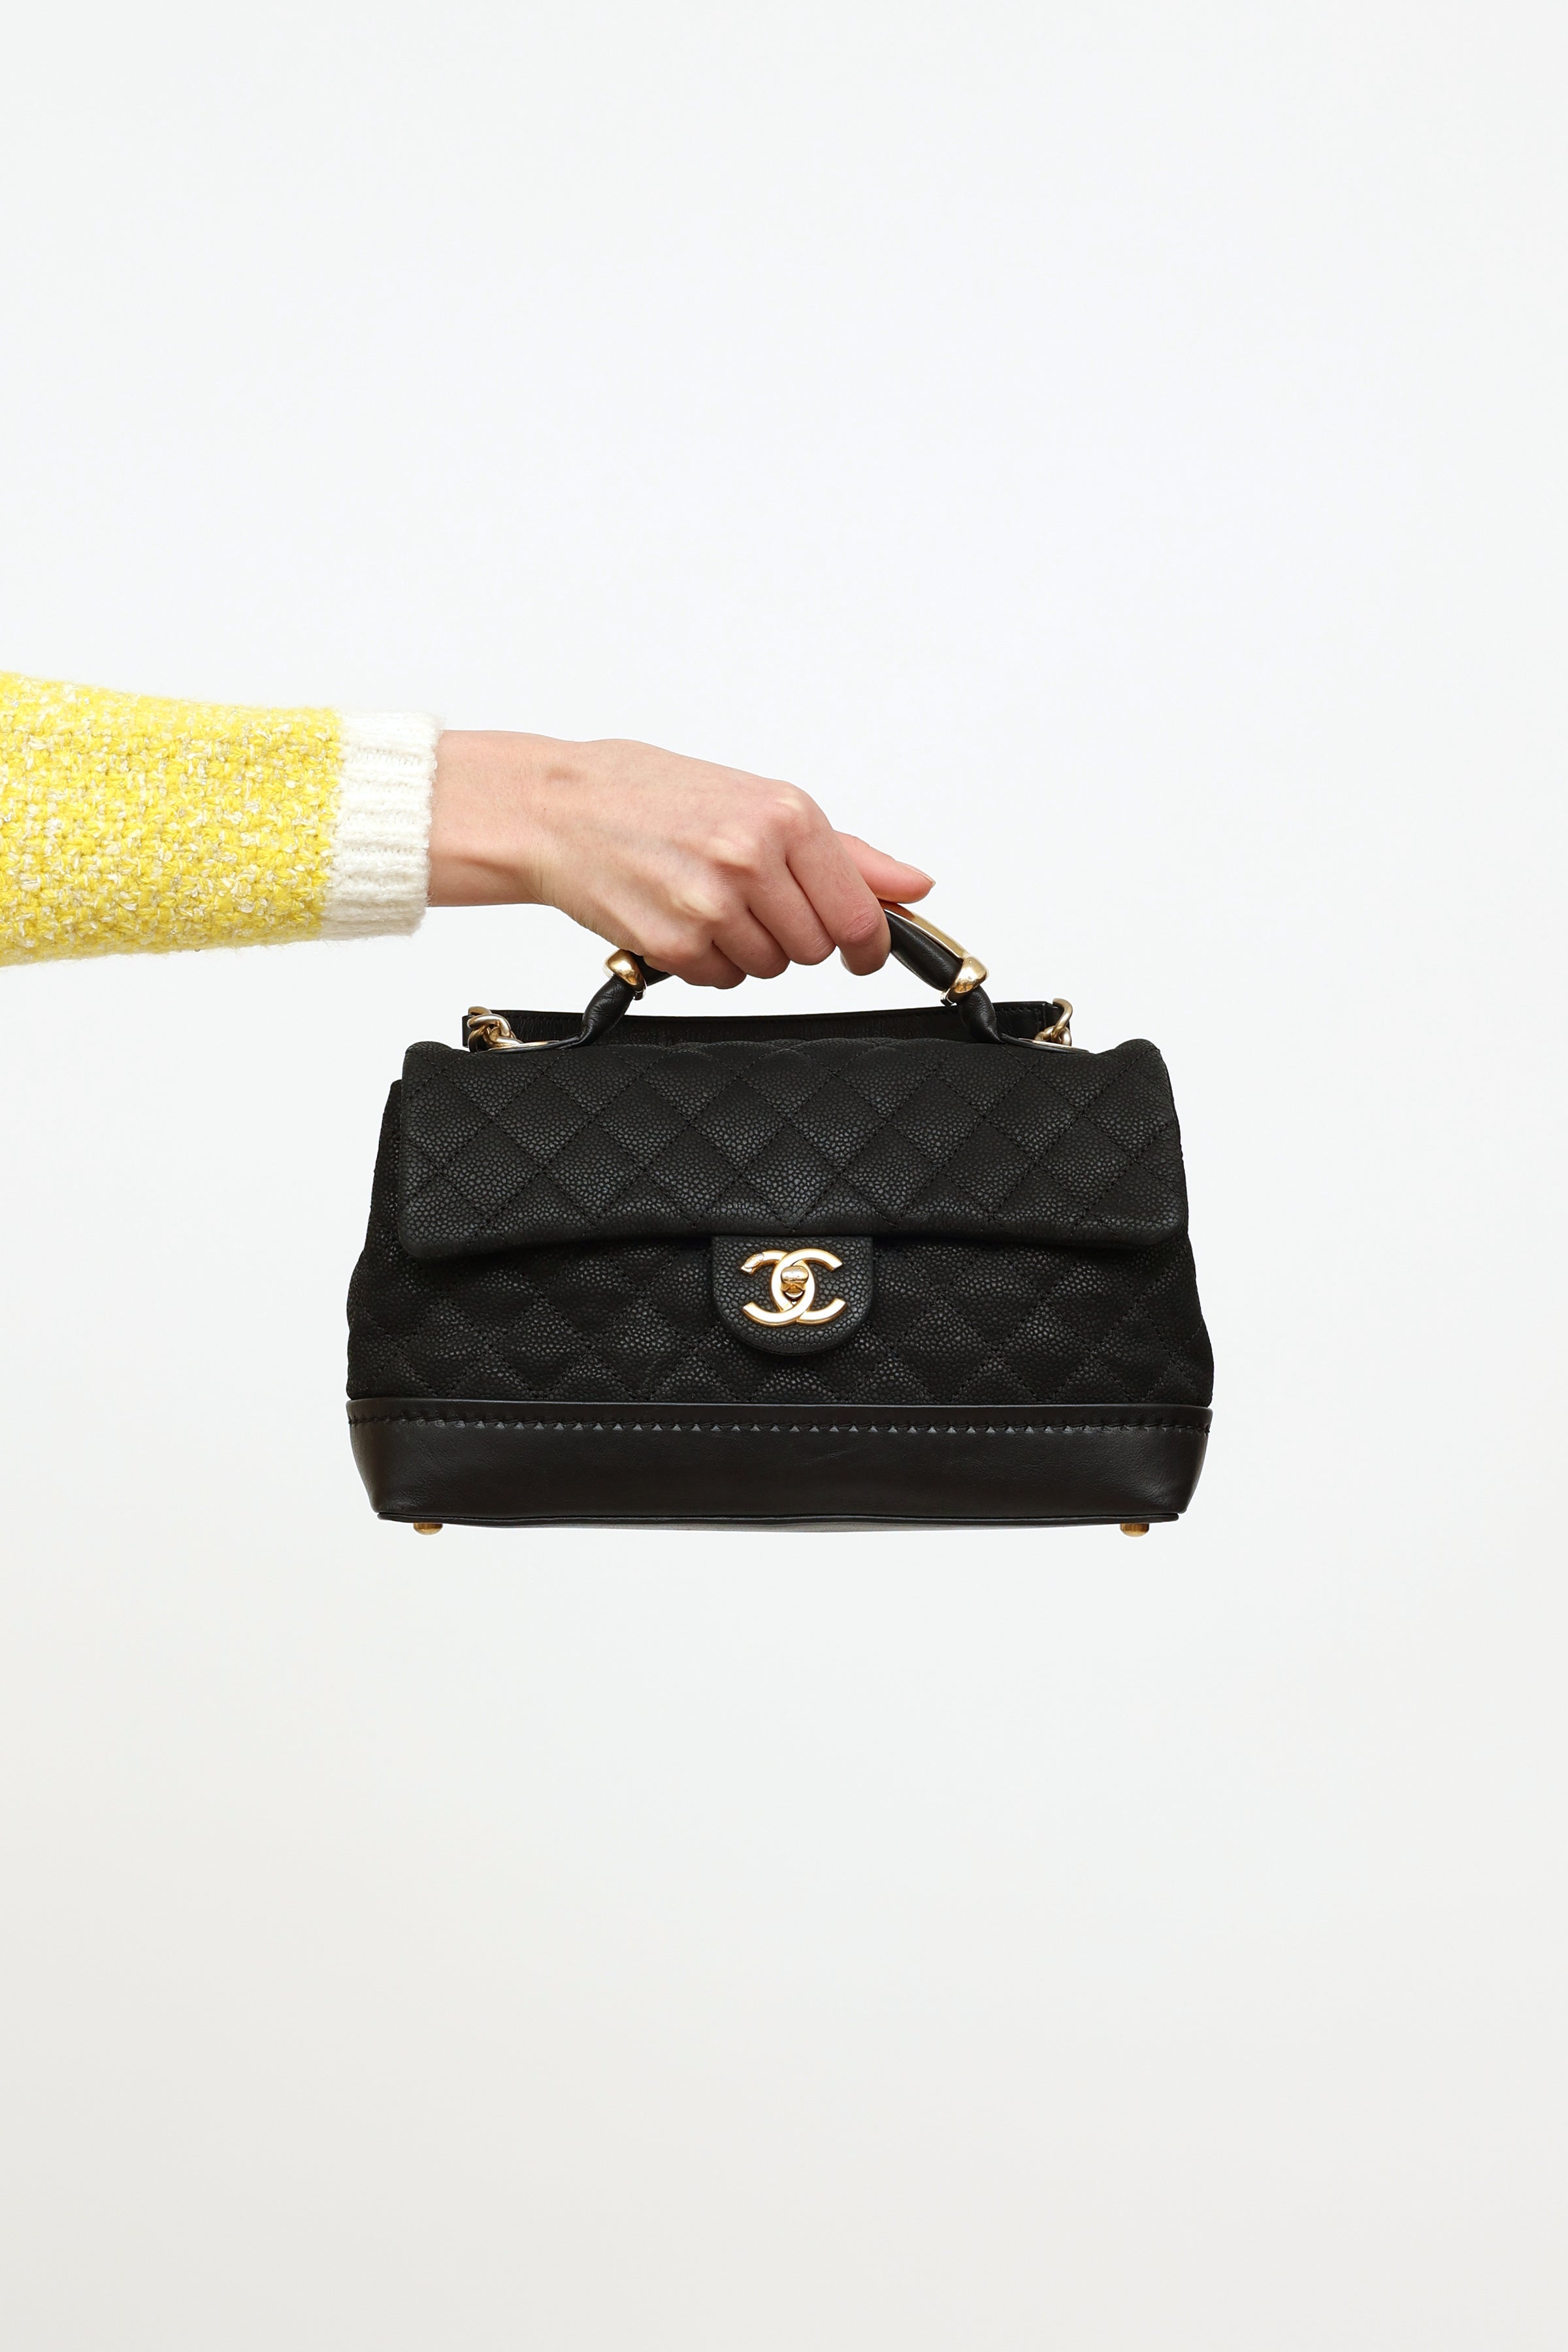 Chanel // 2013 Black Iridescent Caviar Globe Trotter Flap Bag